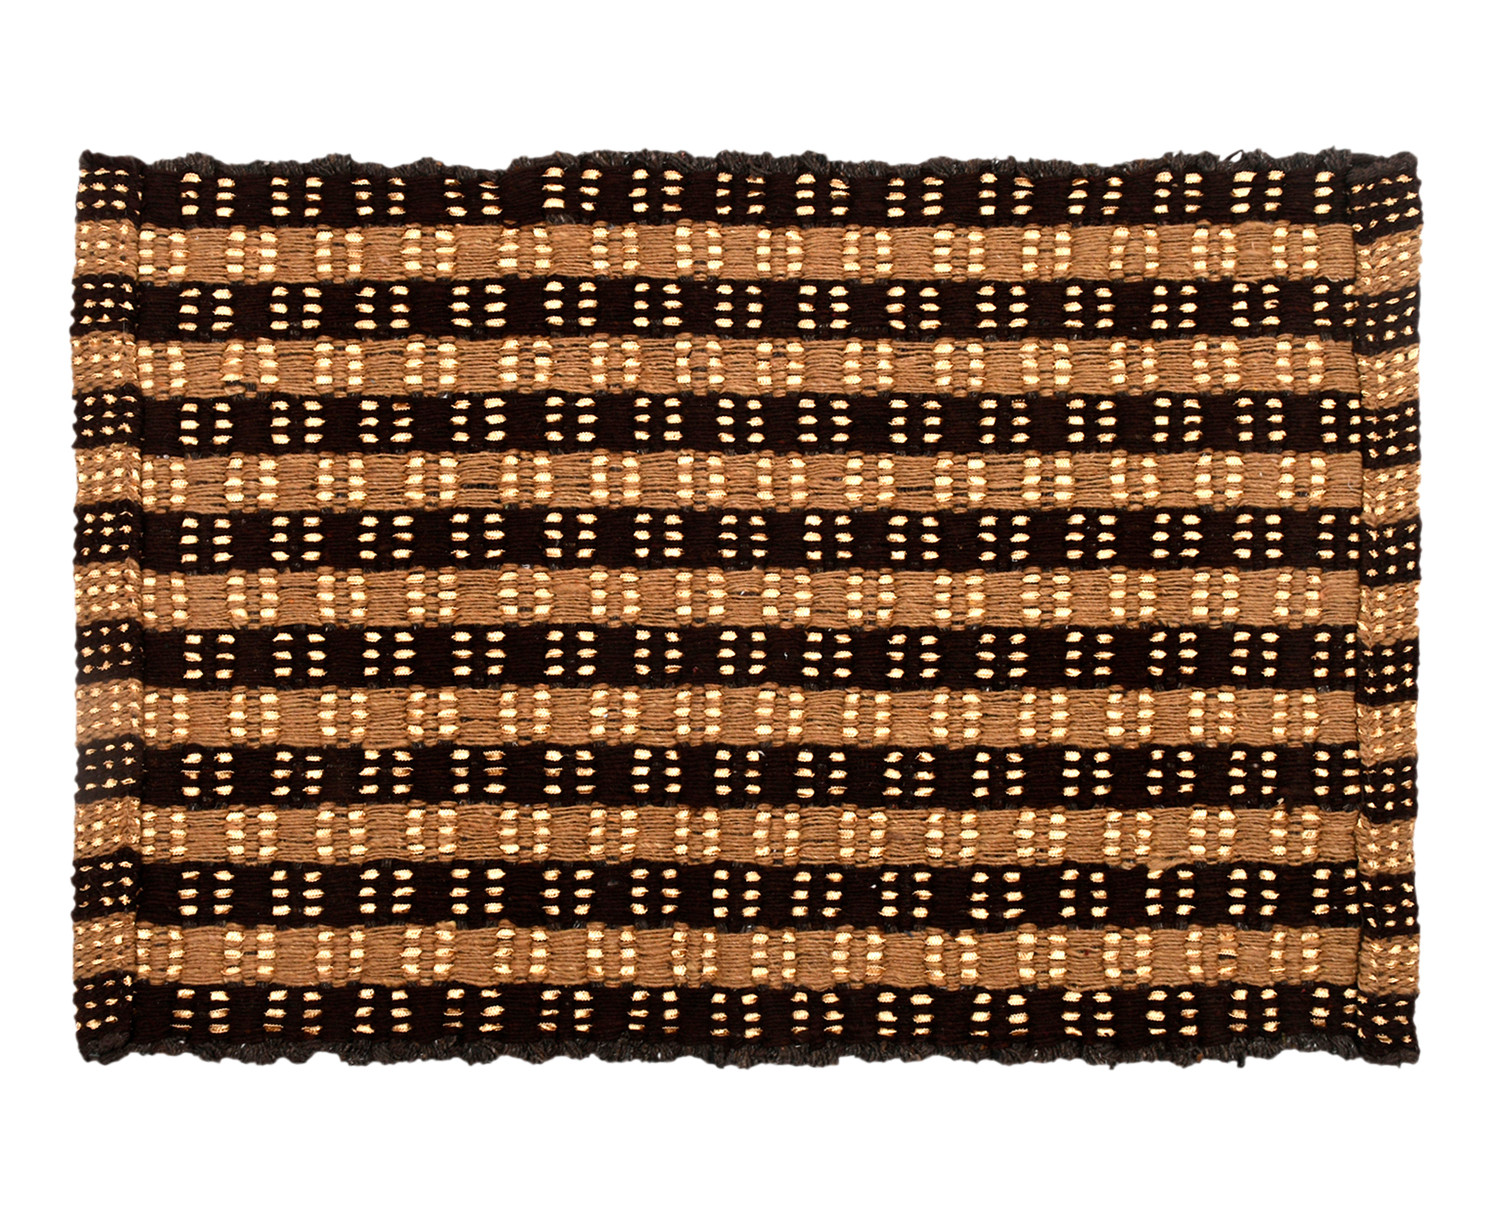 Kuber Industries Strips Design Multiuses Washable Cotton Door Mat, Bathmat, 23